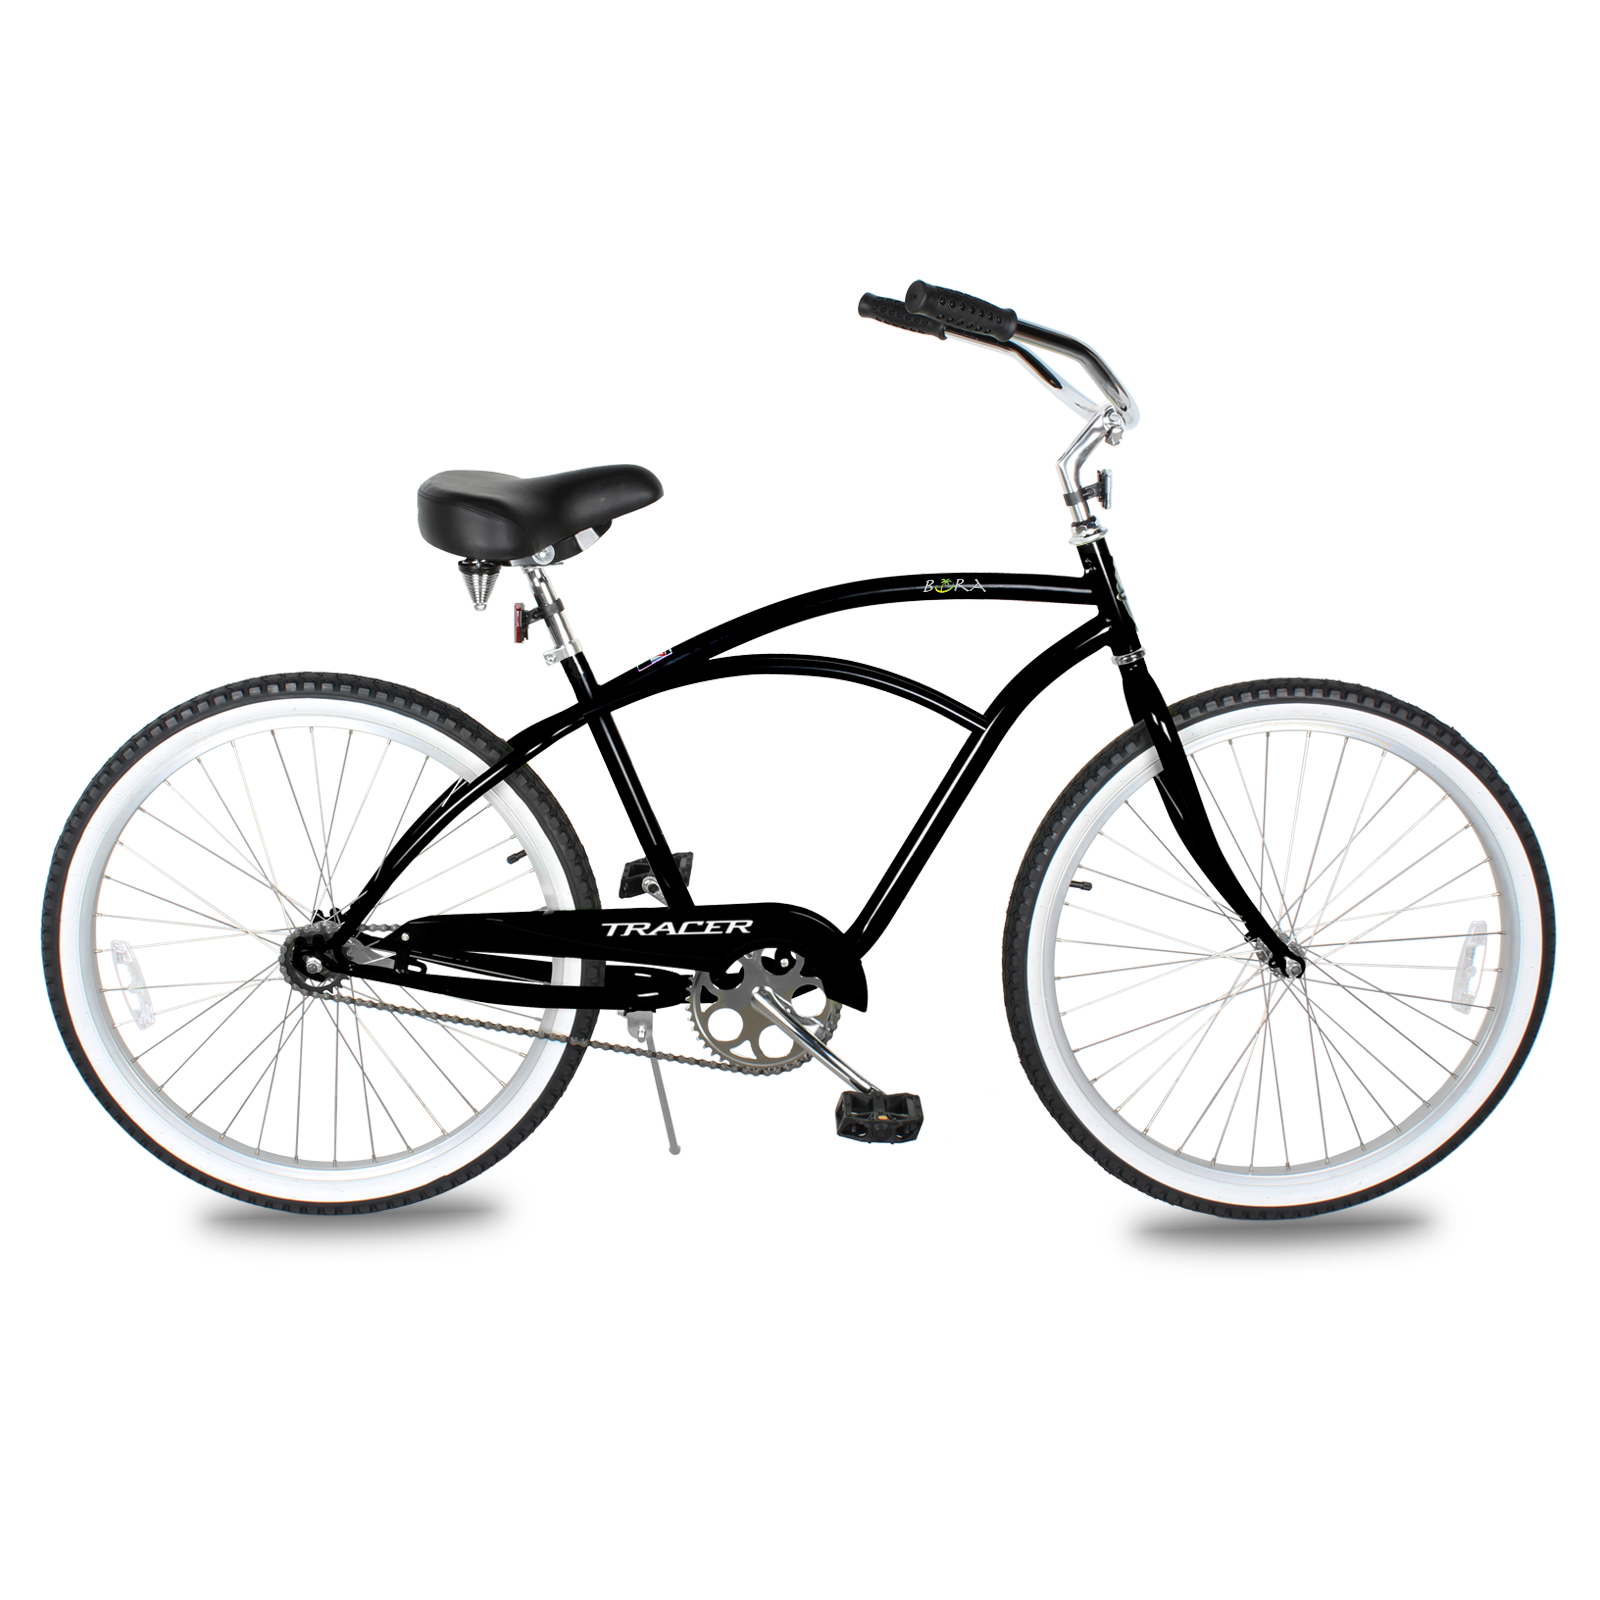 custom cruiser bicycle frames